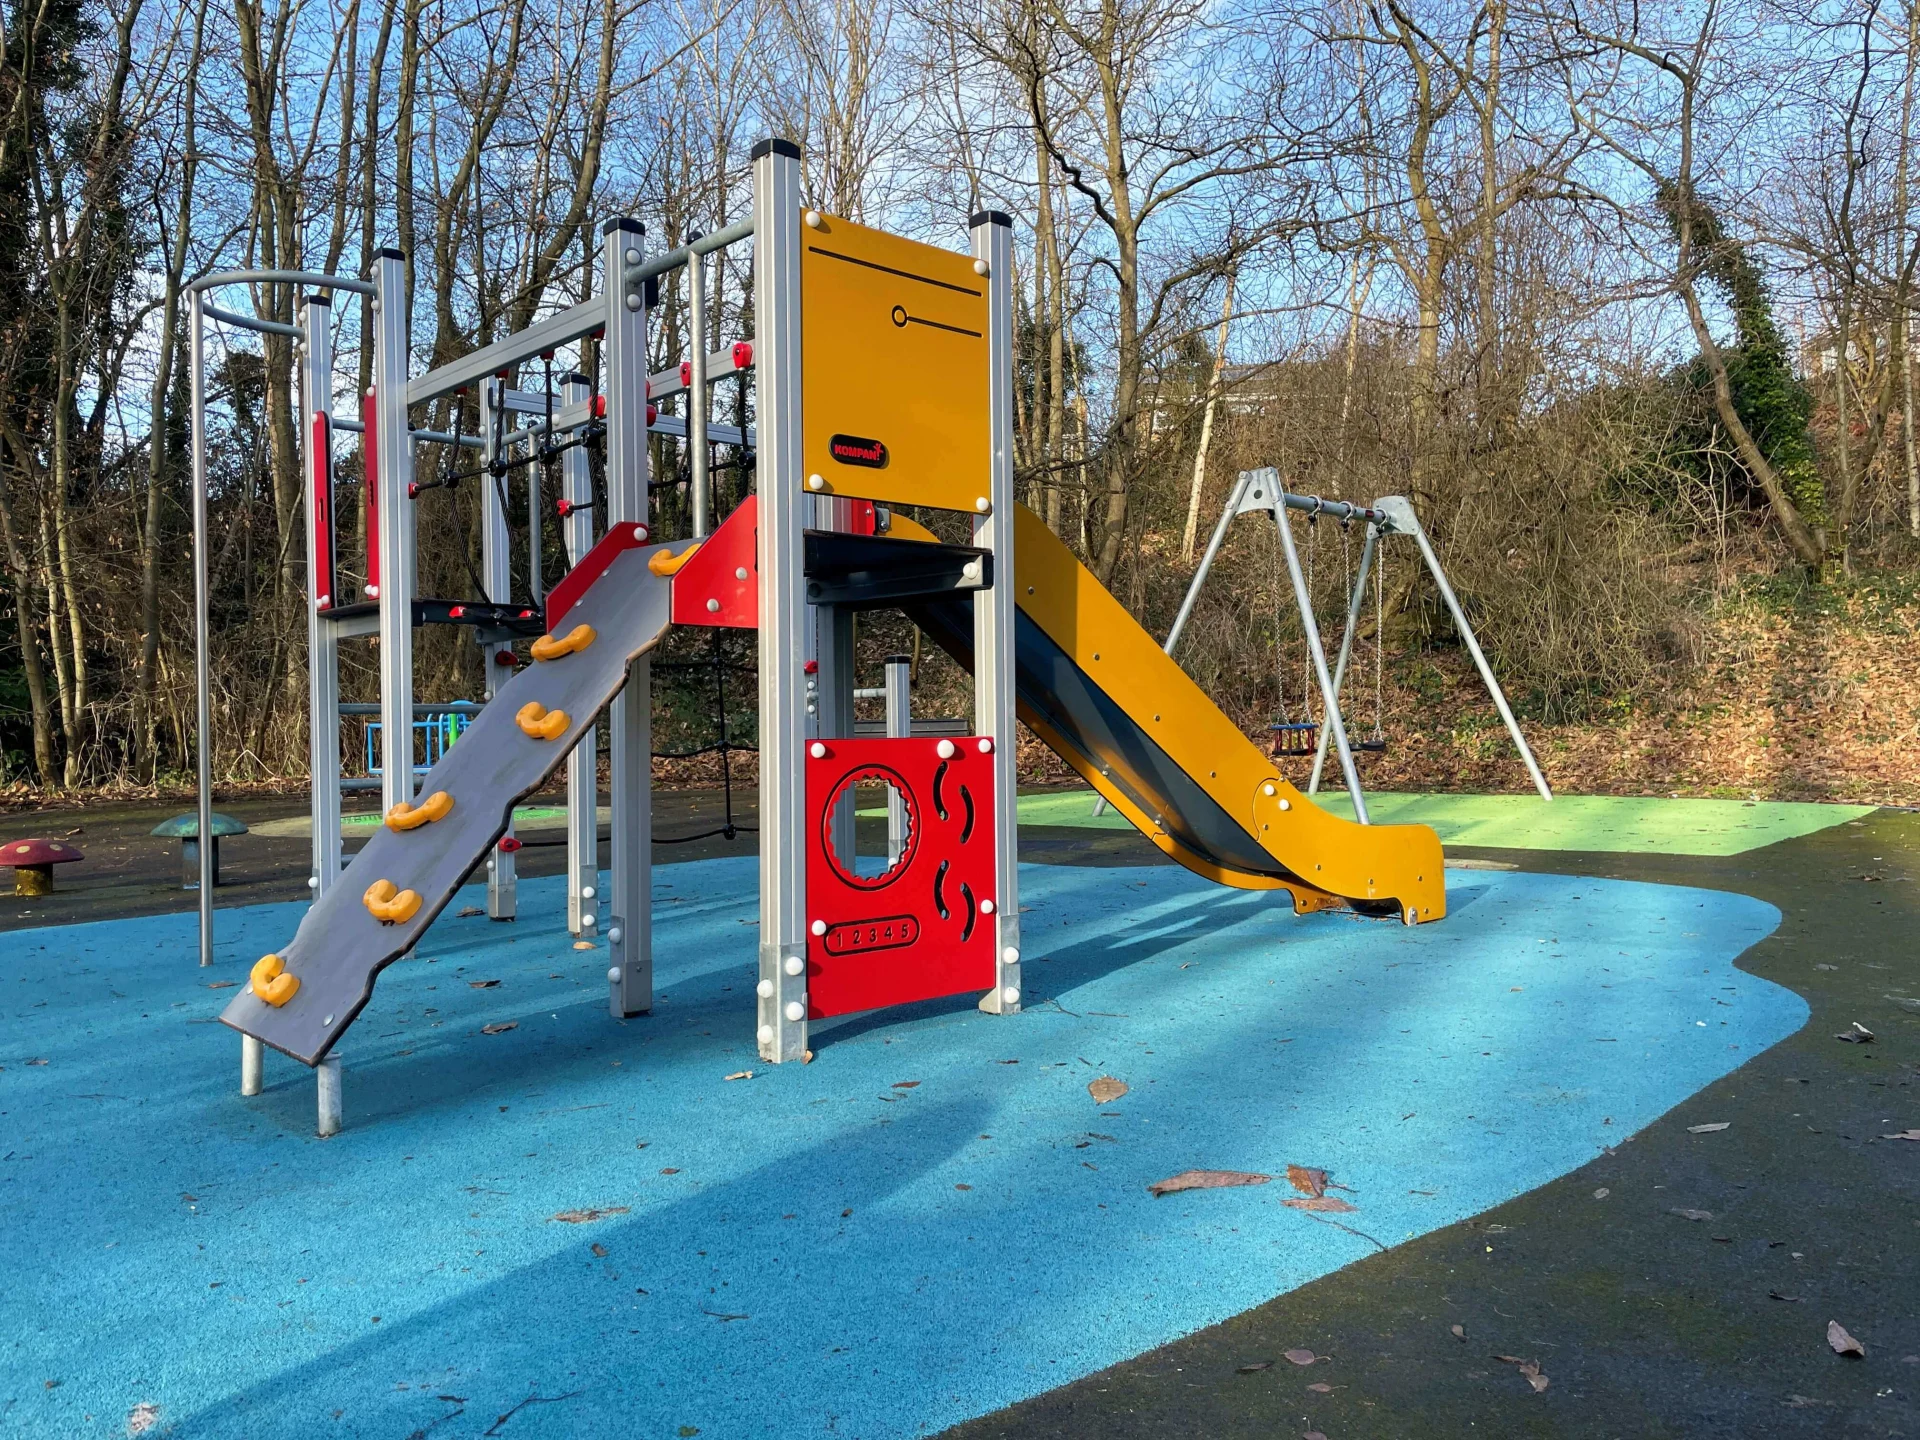 Upper Fulling Playground Maidstone Kent